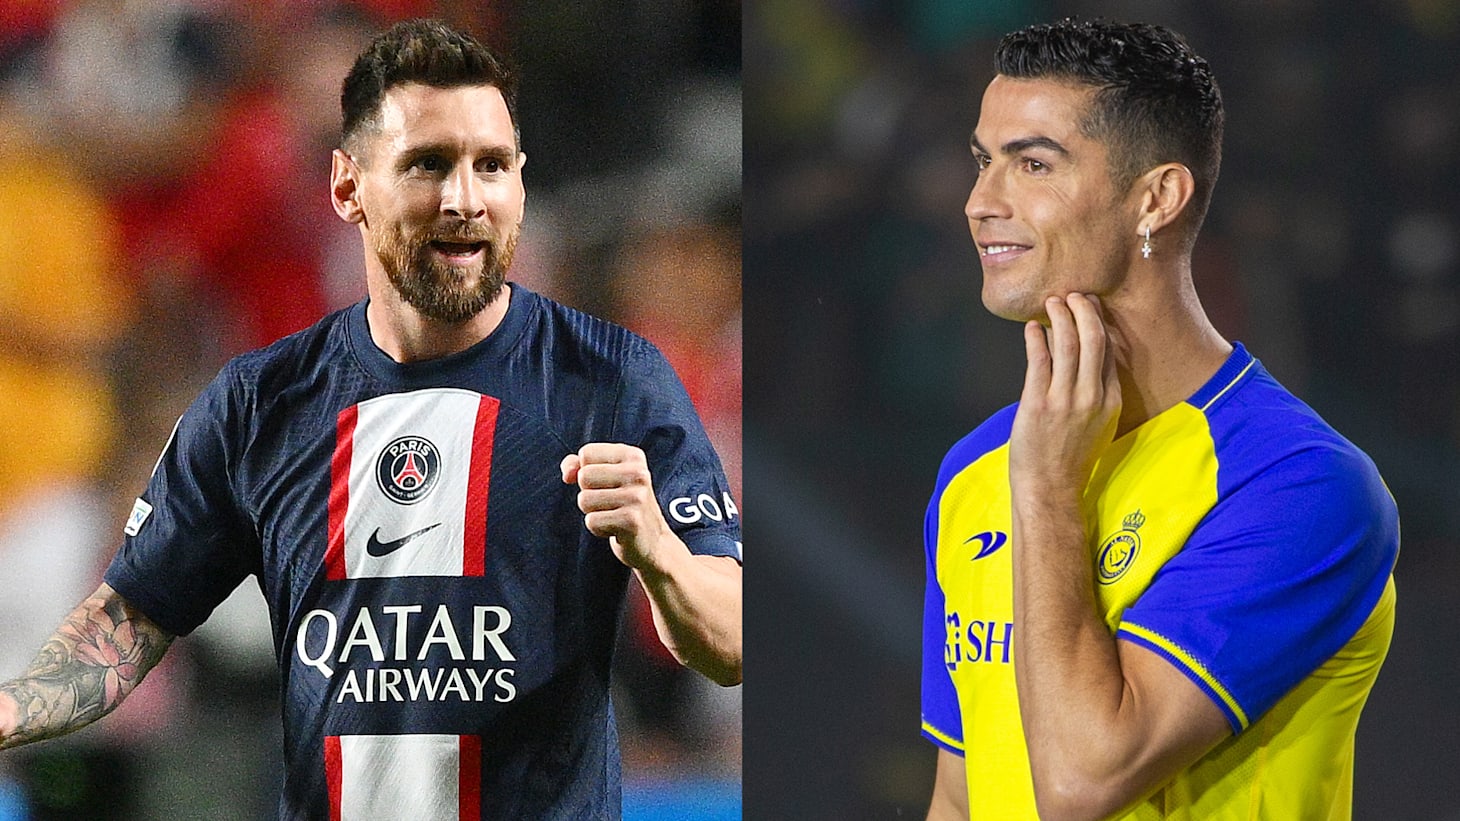 Salah satu pemain sepak bola terbaik Dunia Cristiano Ronaldo mengatakan jika rivalitas antaranya dan Messi sudah selesai. Mereka berdua